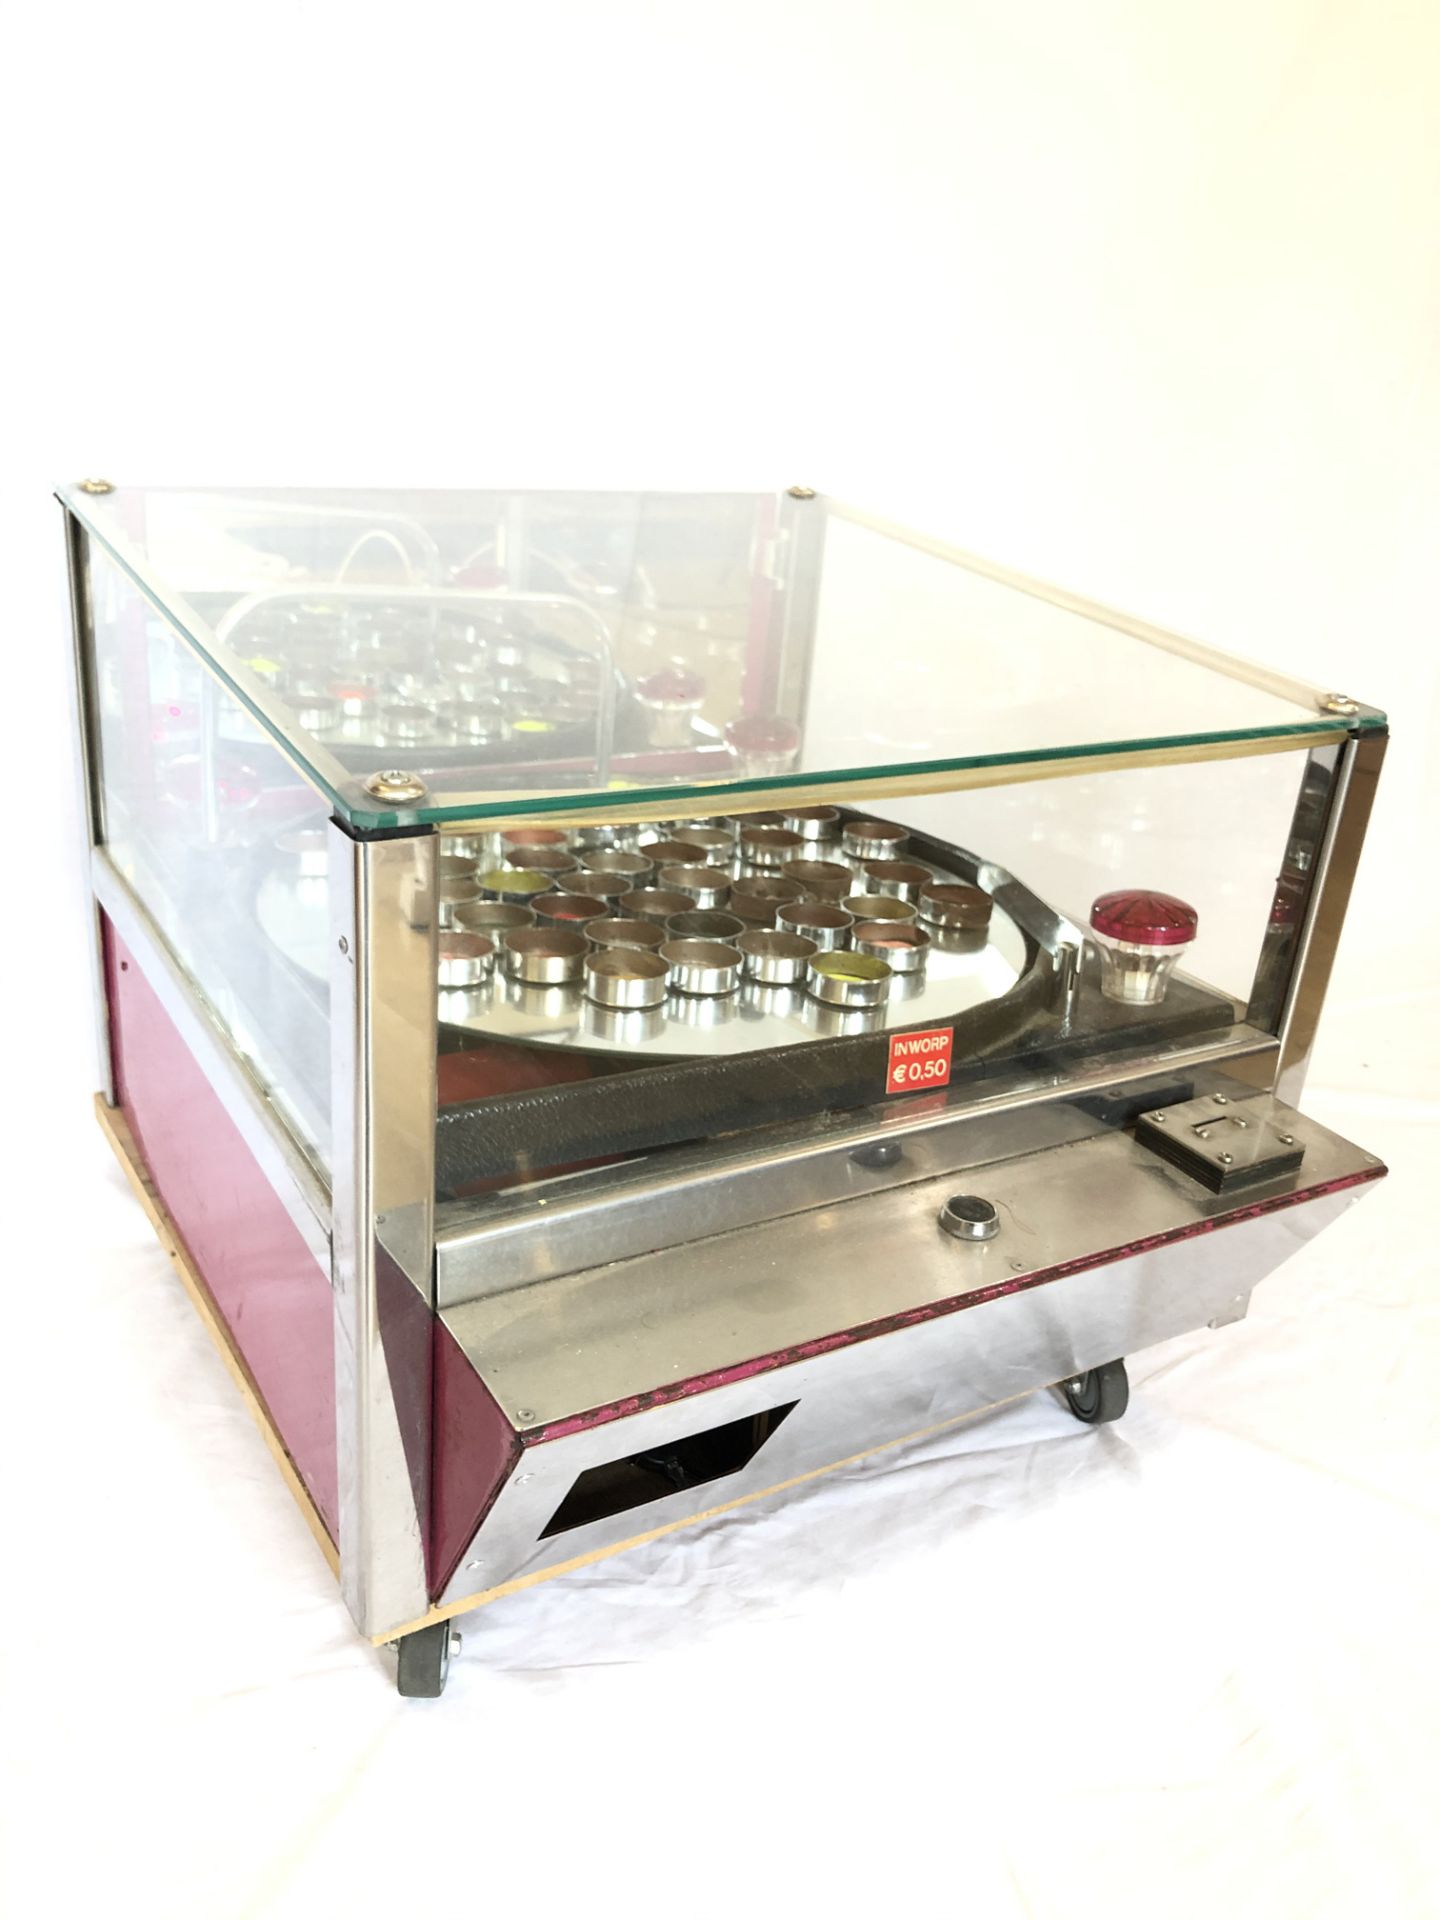 Balco Rotor Table Model Fairground Machine - Image 4 of 7